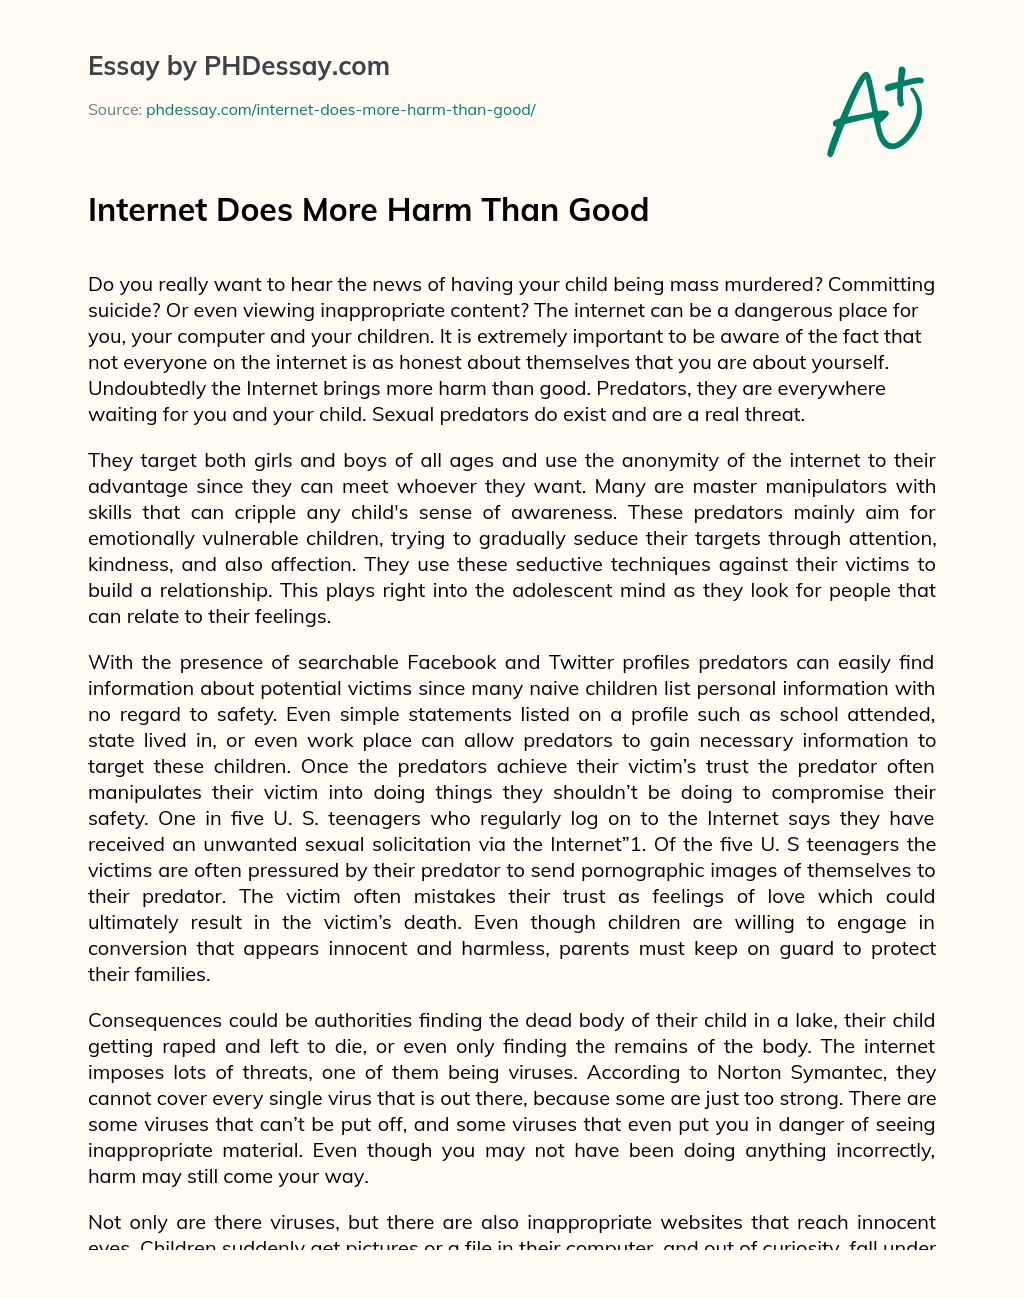 Internet Does More Harm Than Good essay